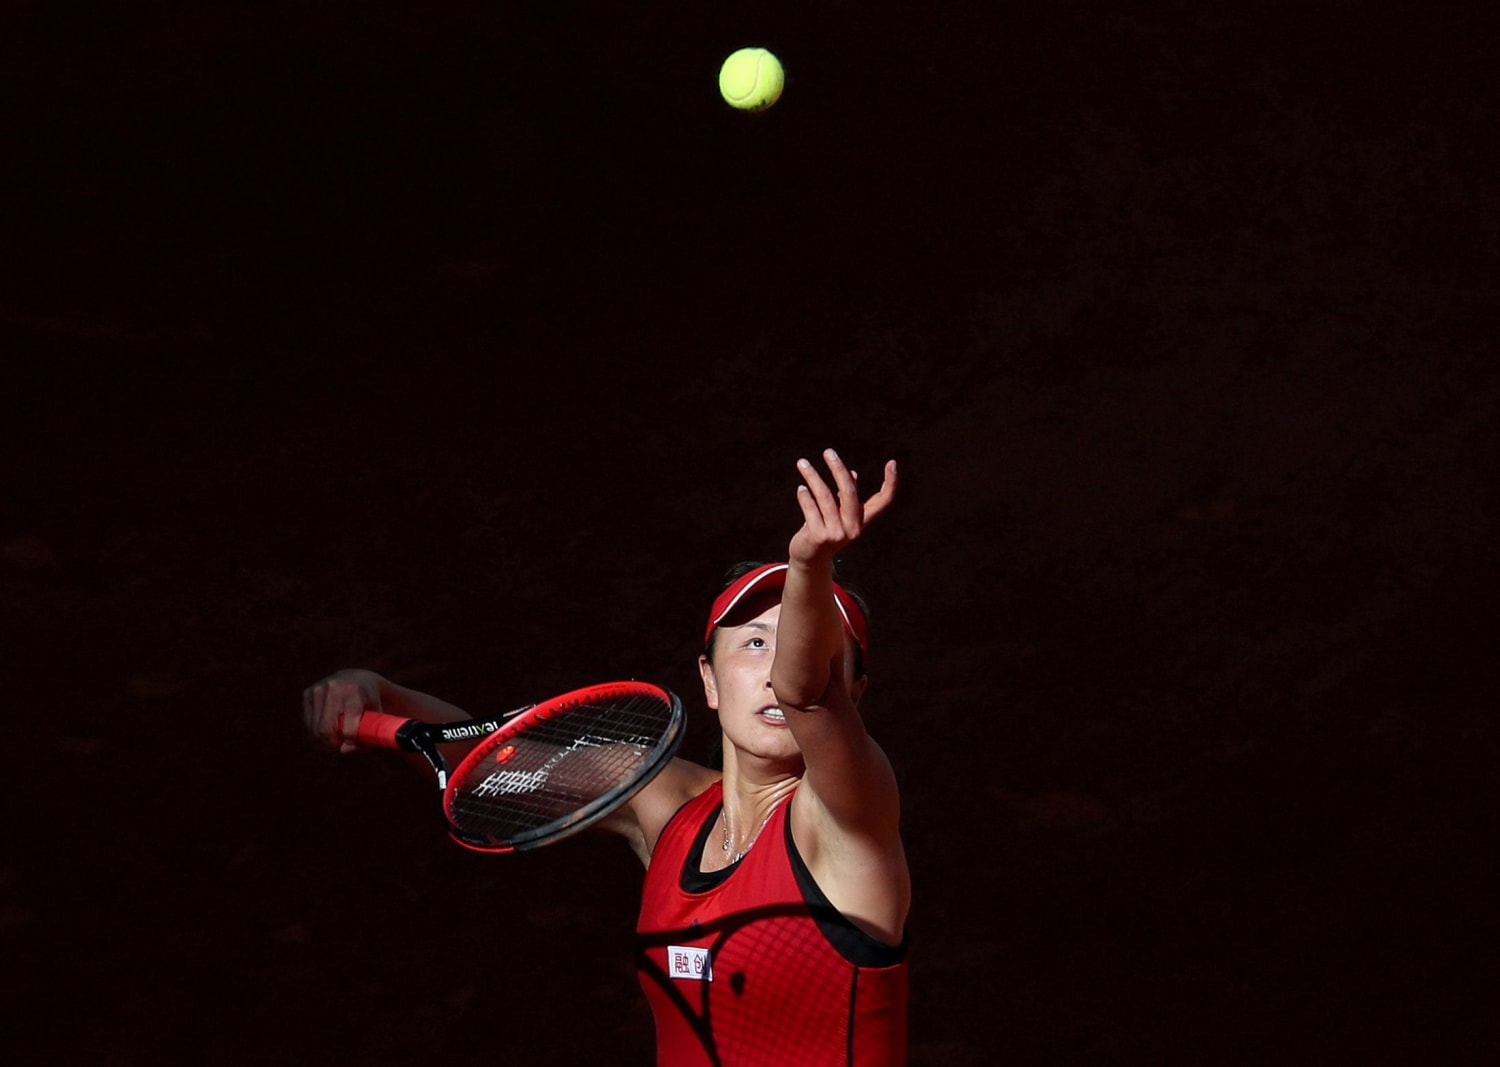 Women’s tennis tour suspends China events over Peng Shuai concerns